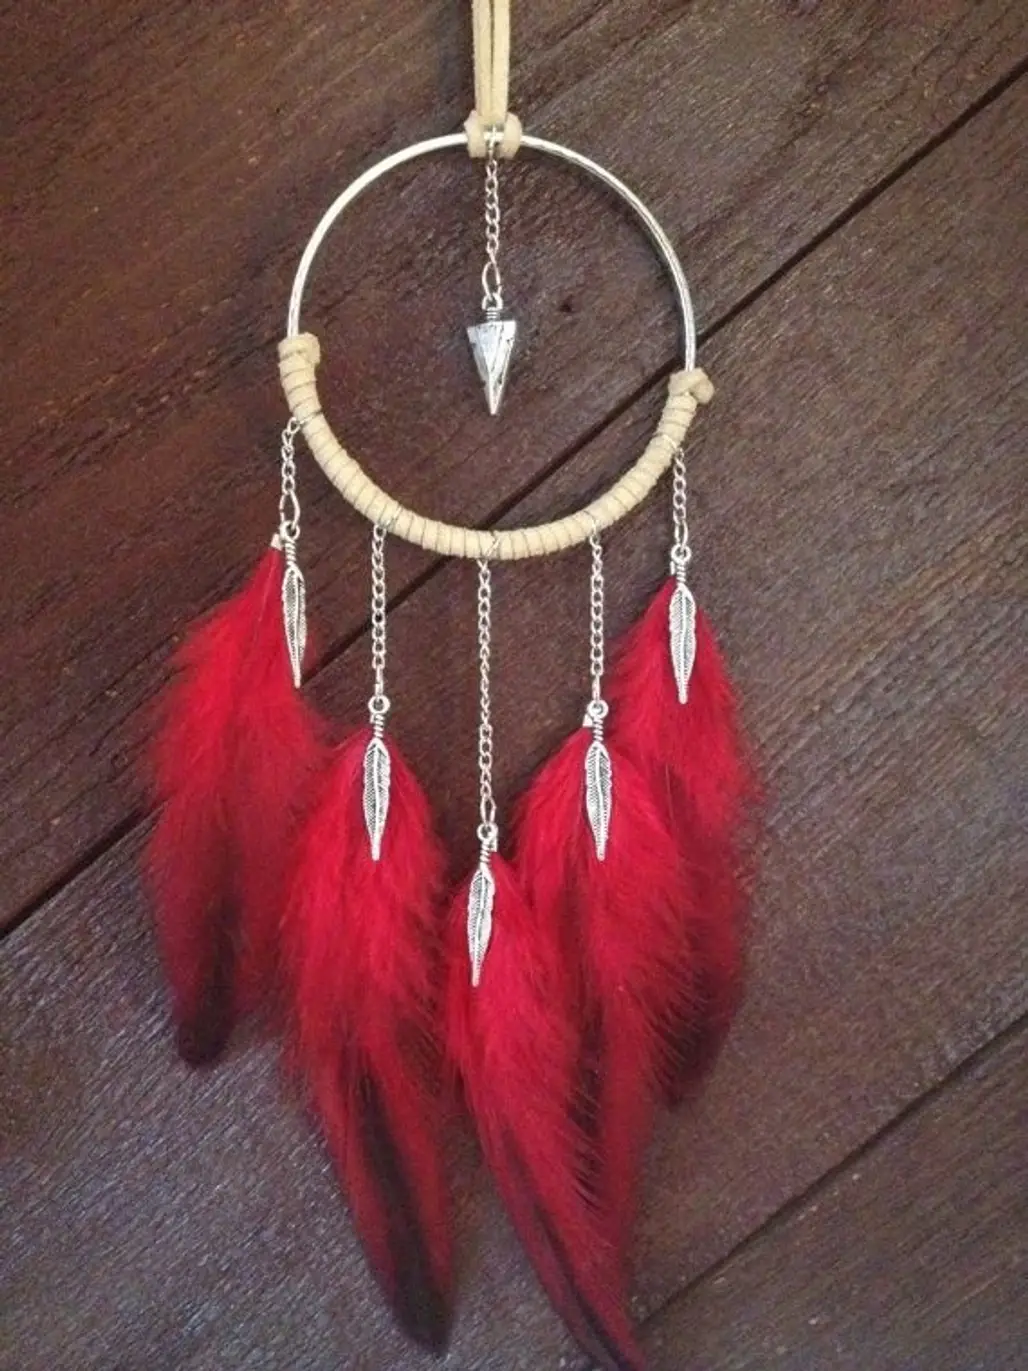 Dream Catcher Feather Necklace